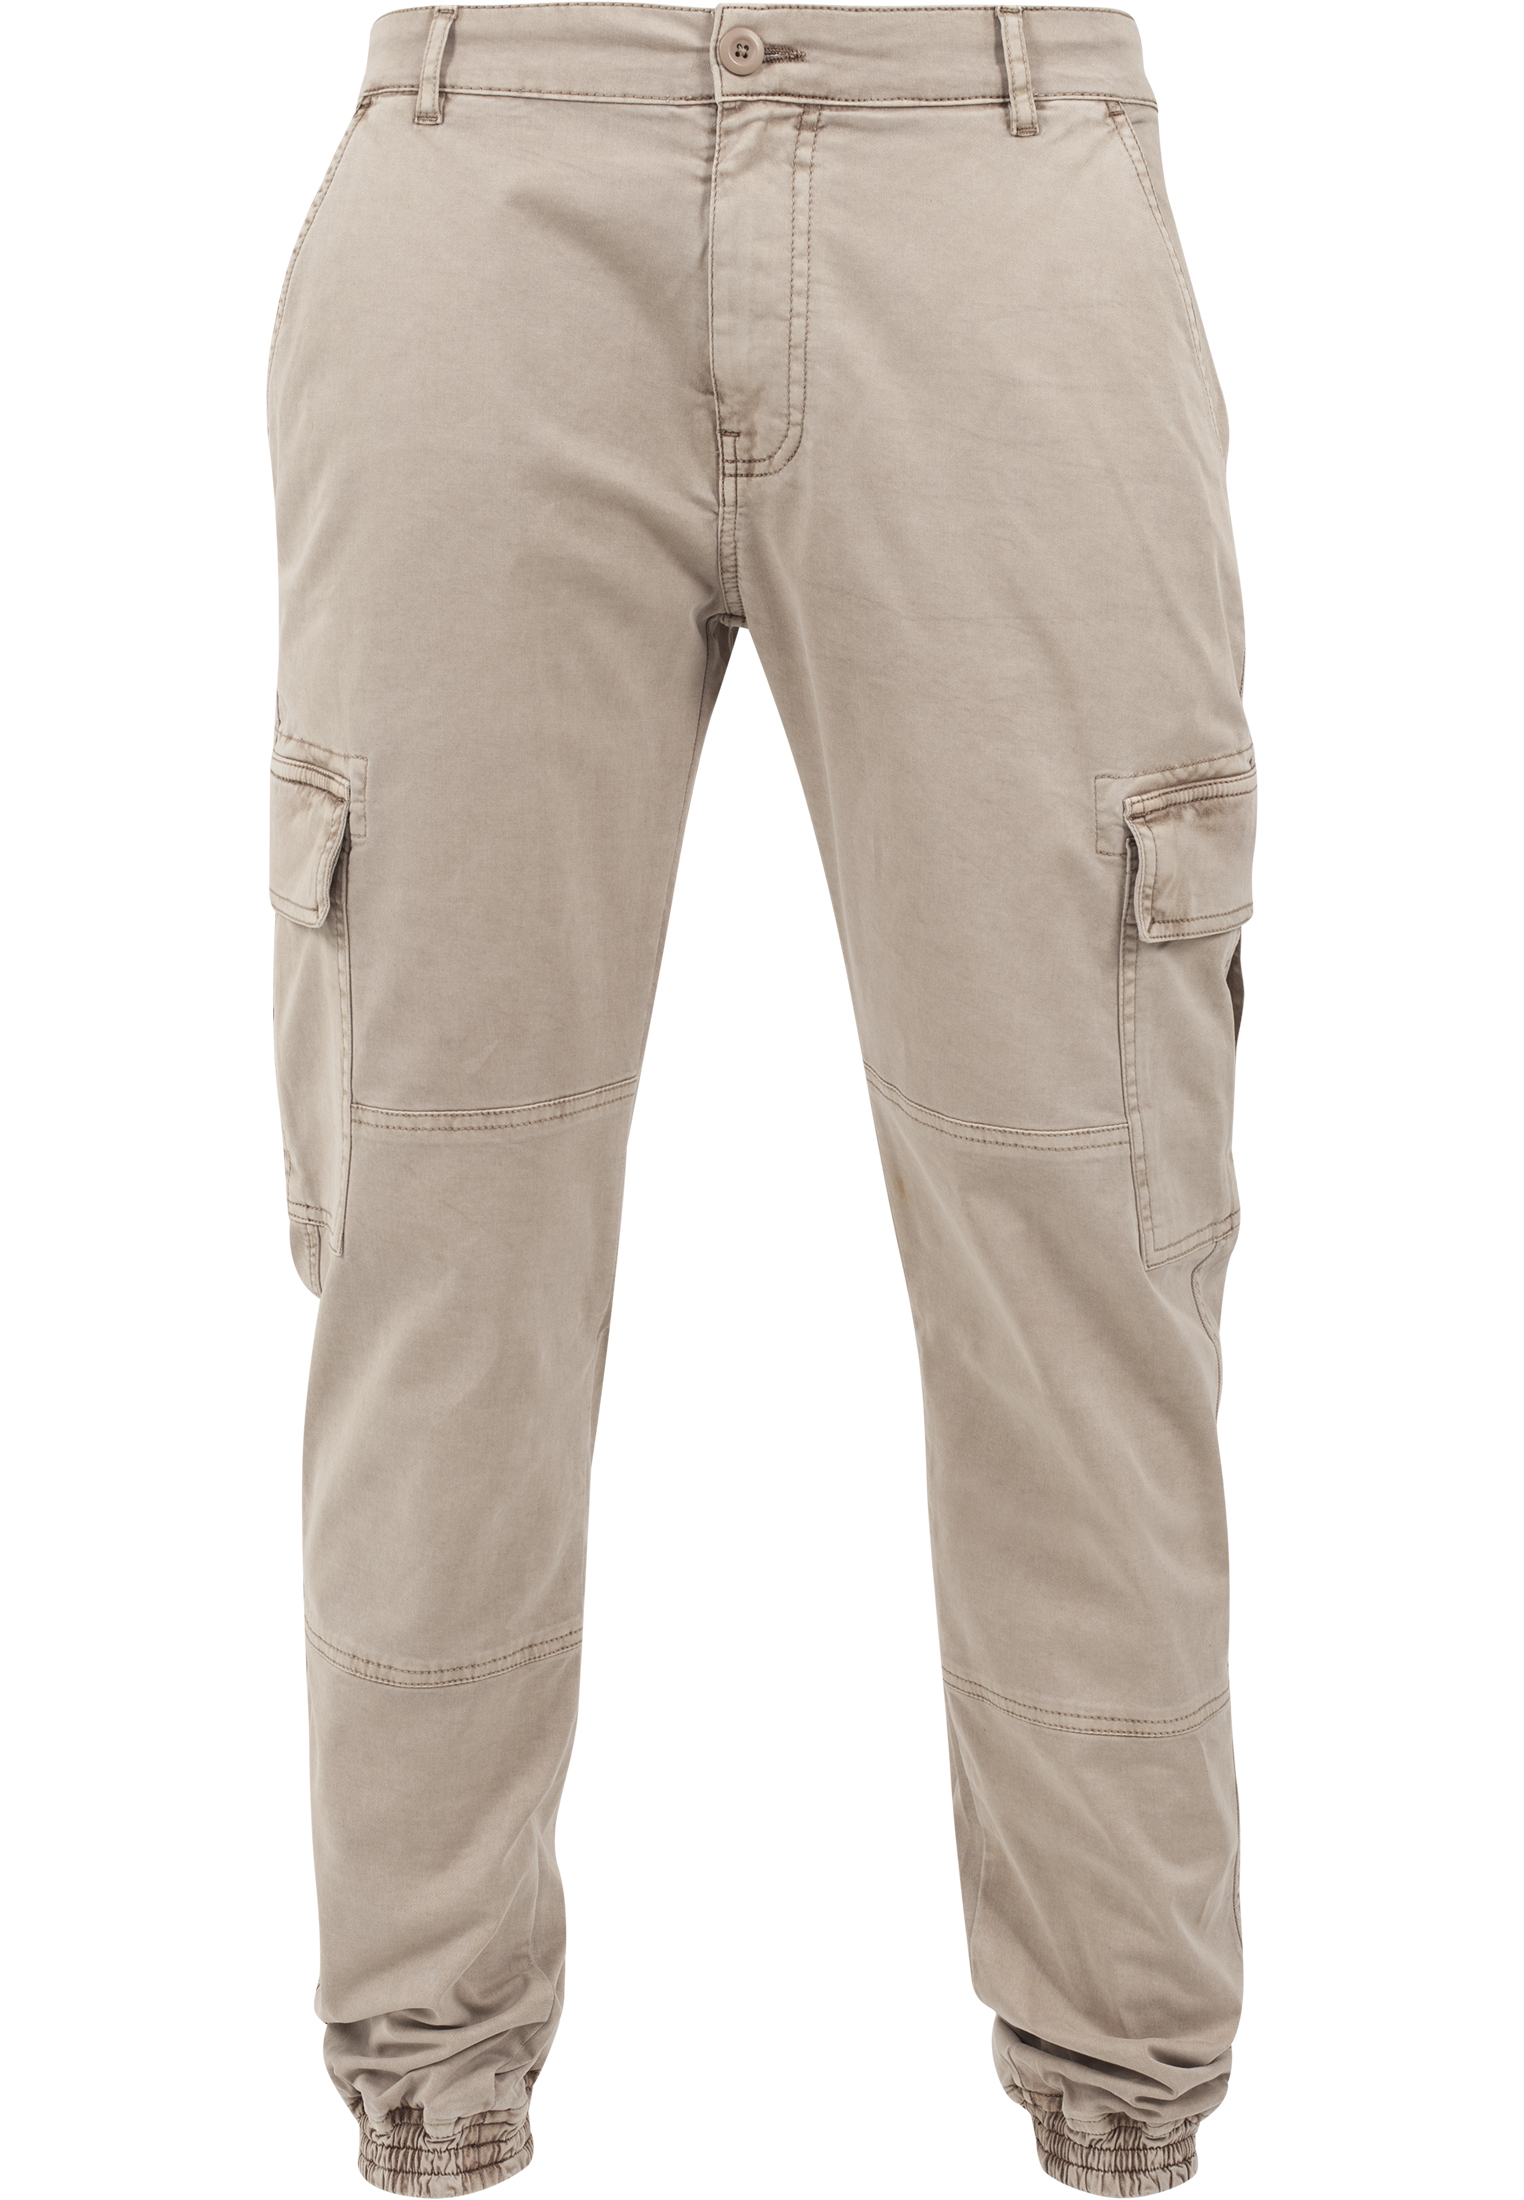 Urban Classics Mens Cargo Trousers Pants Army Cargo Jogging Pants | eBay